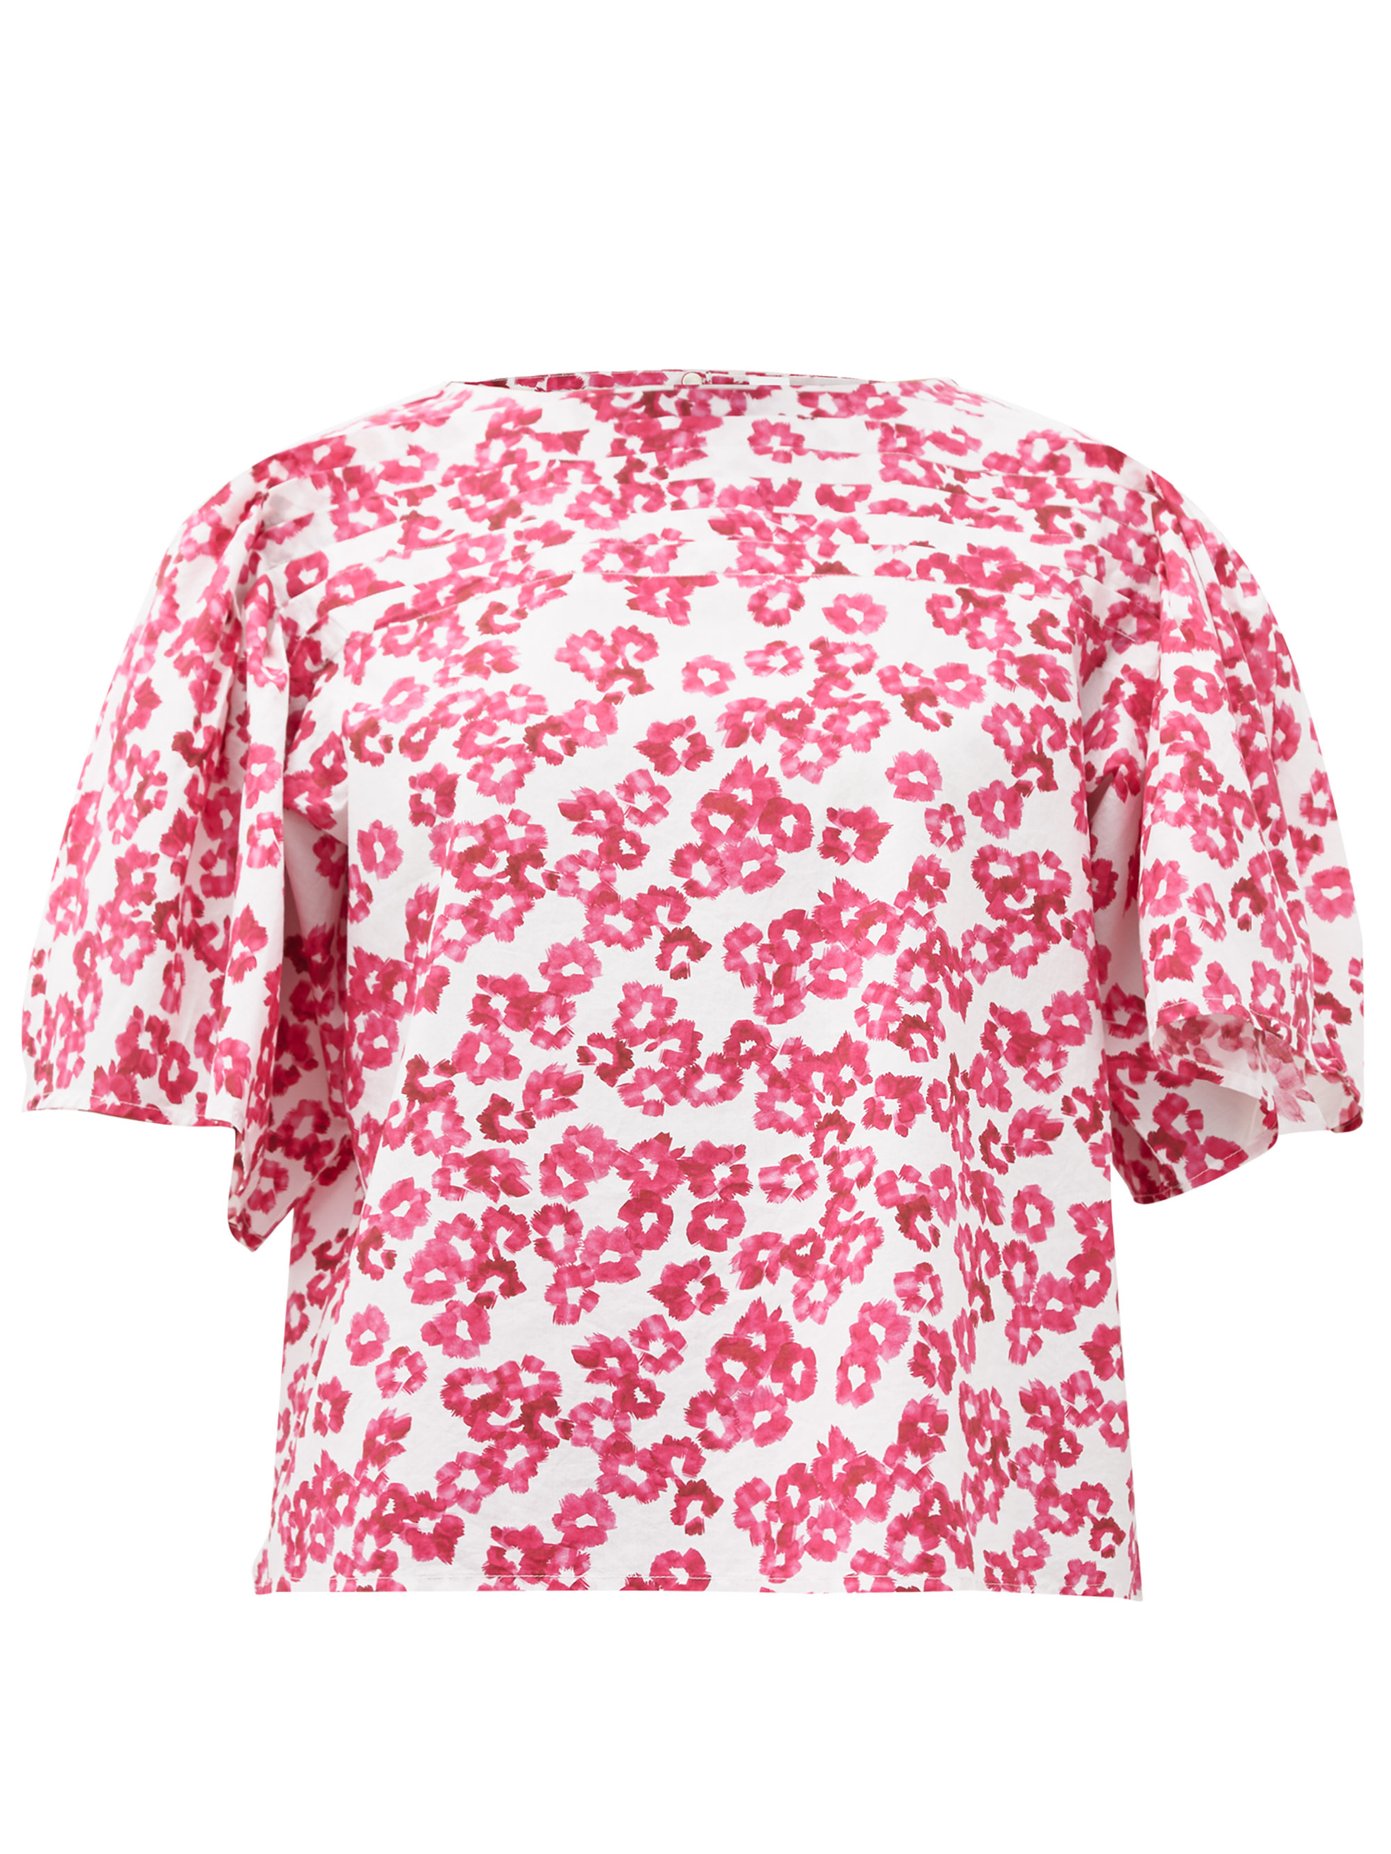 Merlette floral-print blouse